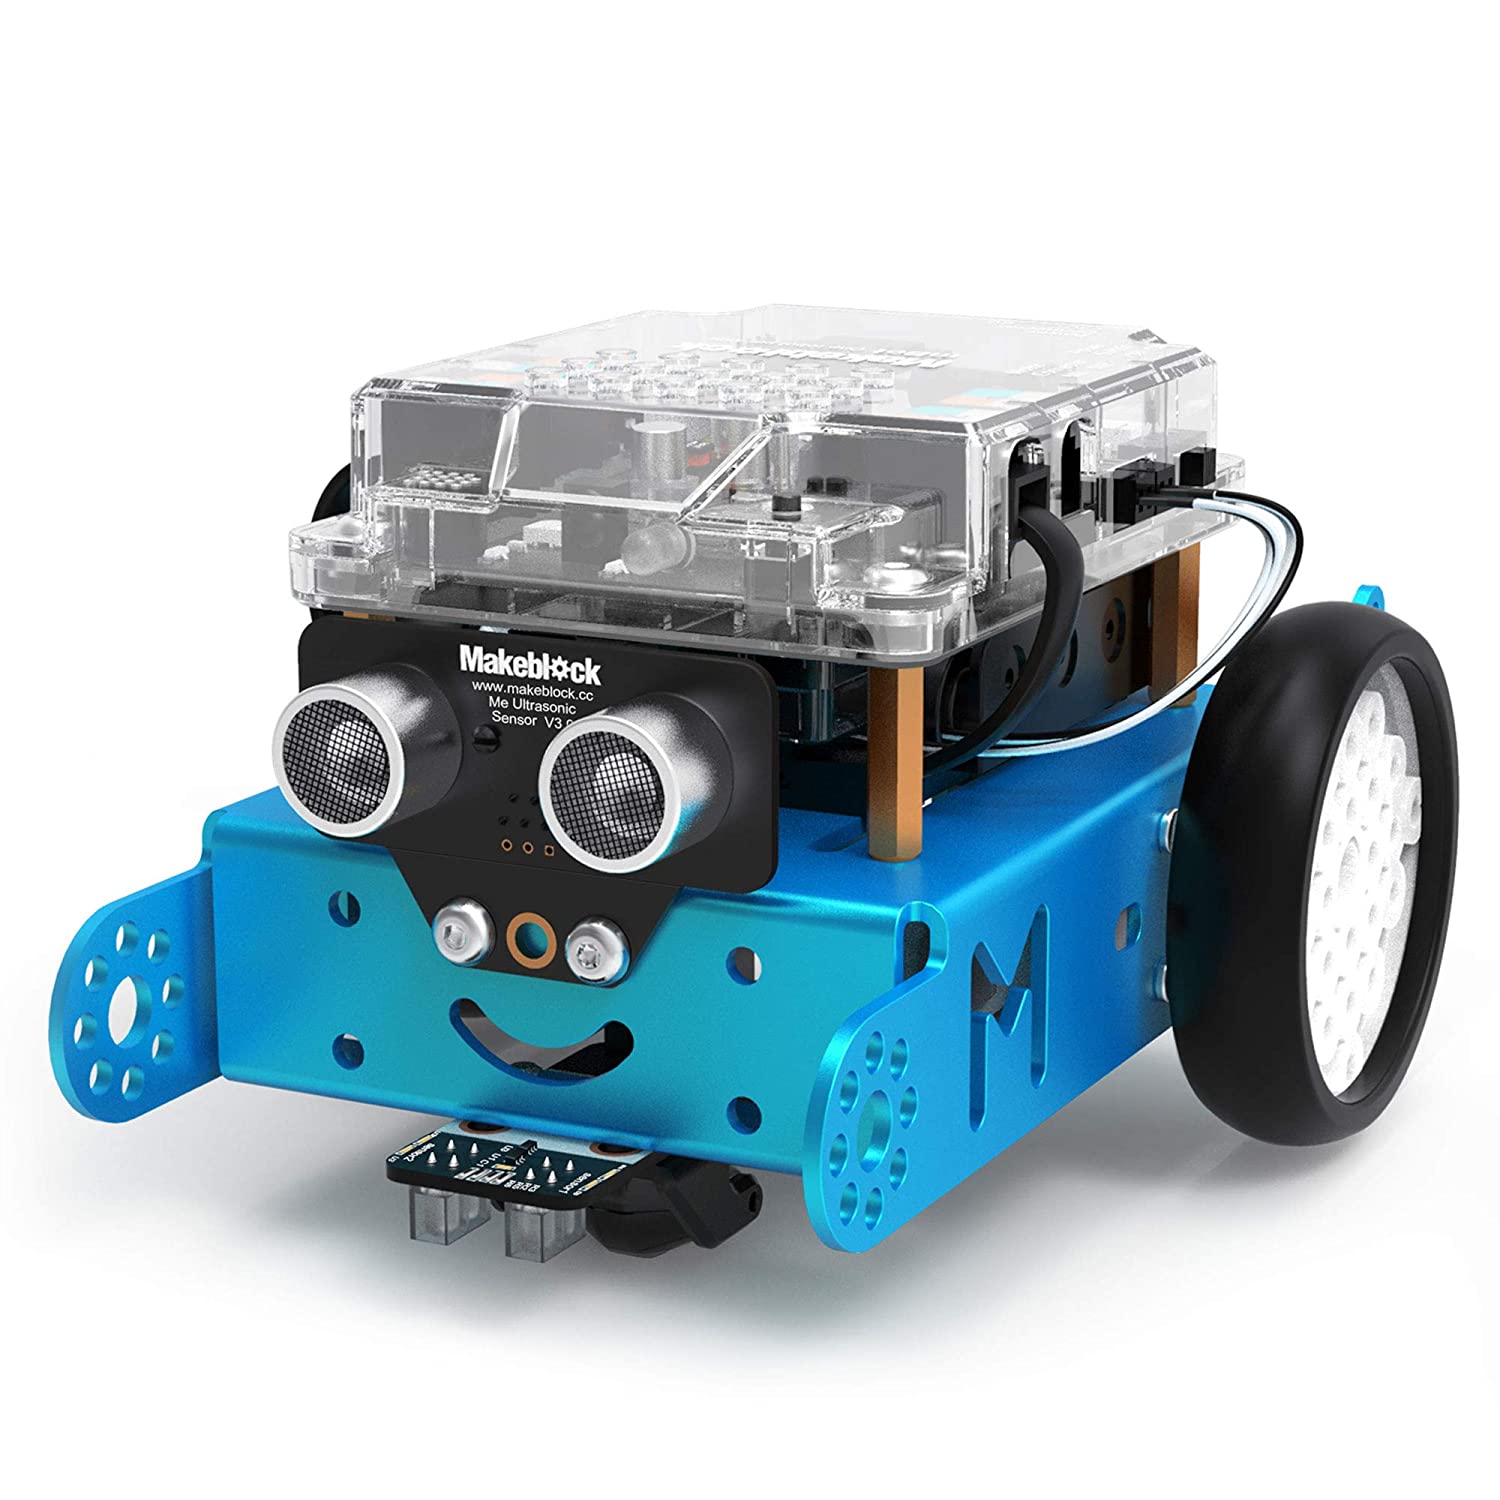 Makeblock mBot Robot Kit, DIY Mechanical Building Blocks, Entry-level Programming Helps Improve Children' s Logical Thinking and Creativity Skills, STEM Education